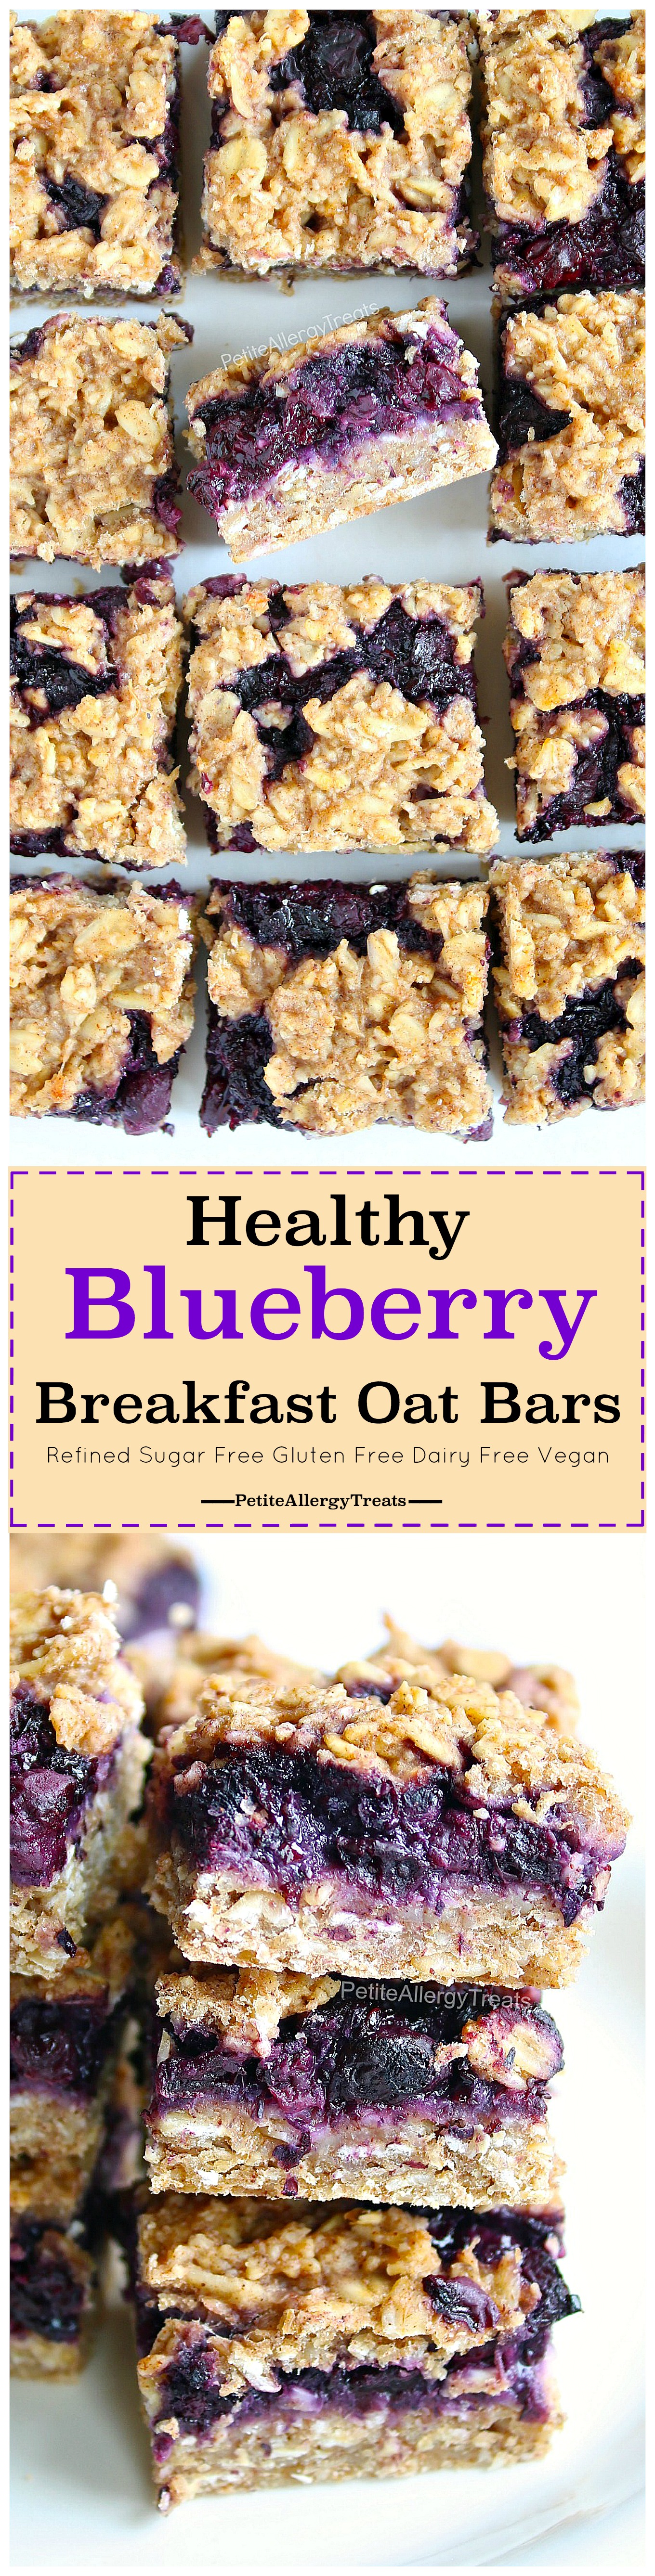 Healthy Breakfast Blueberry Oat Crumble Bars Recipe (gluten free dairy free Vegan) Easy refined sugar free flourless oat bars! Super easy dairy free quick breakfast. Food Allergy friendly.